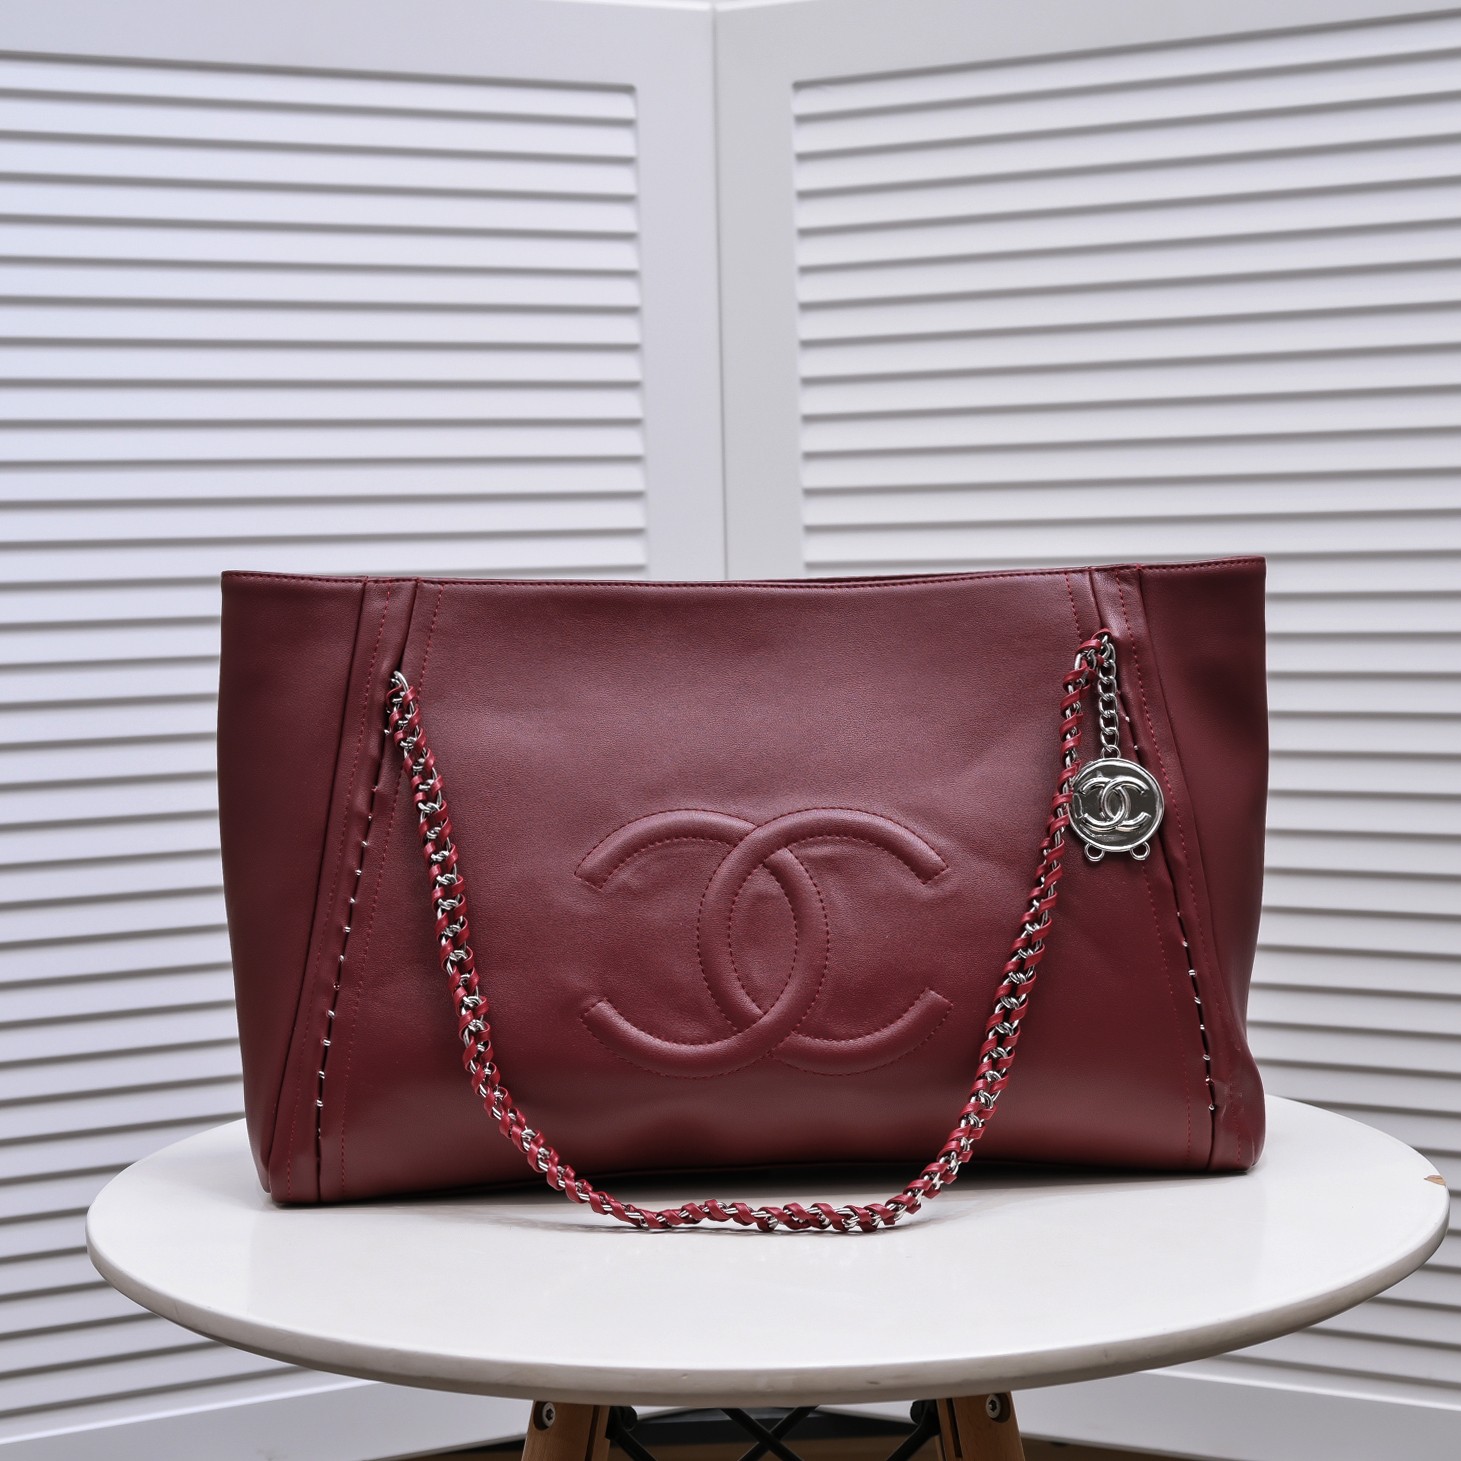 CC Soft Calfskin Shopping Bag Top Handle red/white